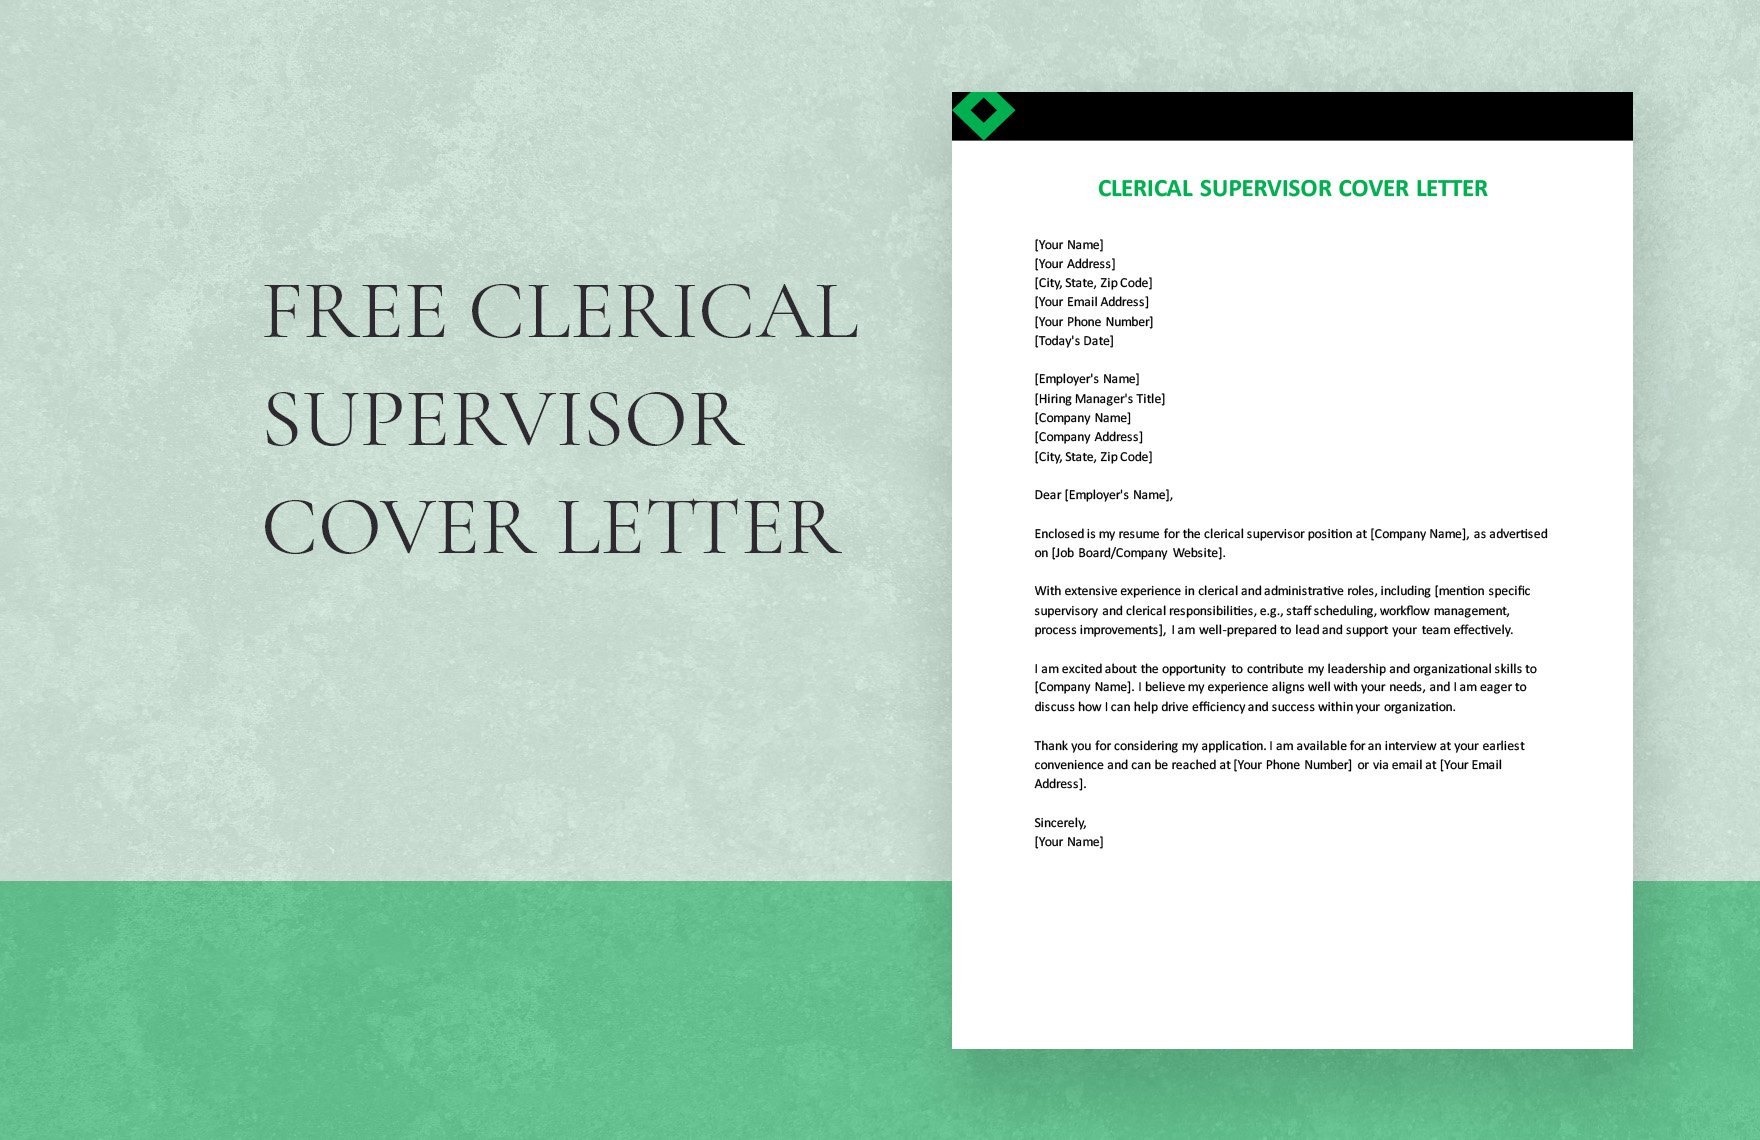 Clerical Supervisor Cover Letter in Word, Google Docs, PDF